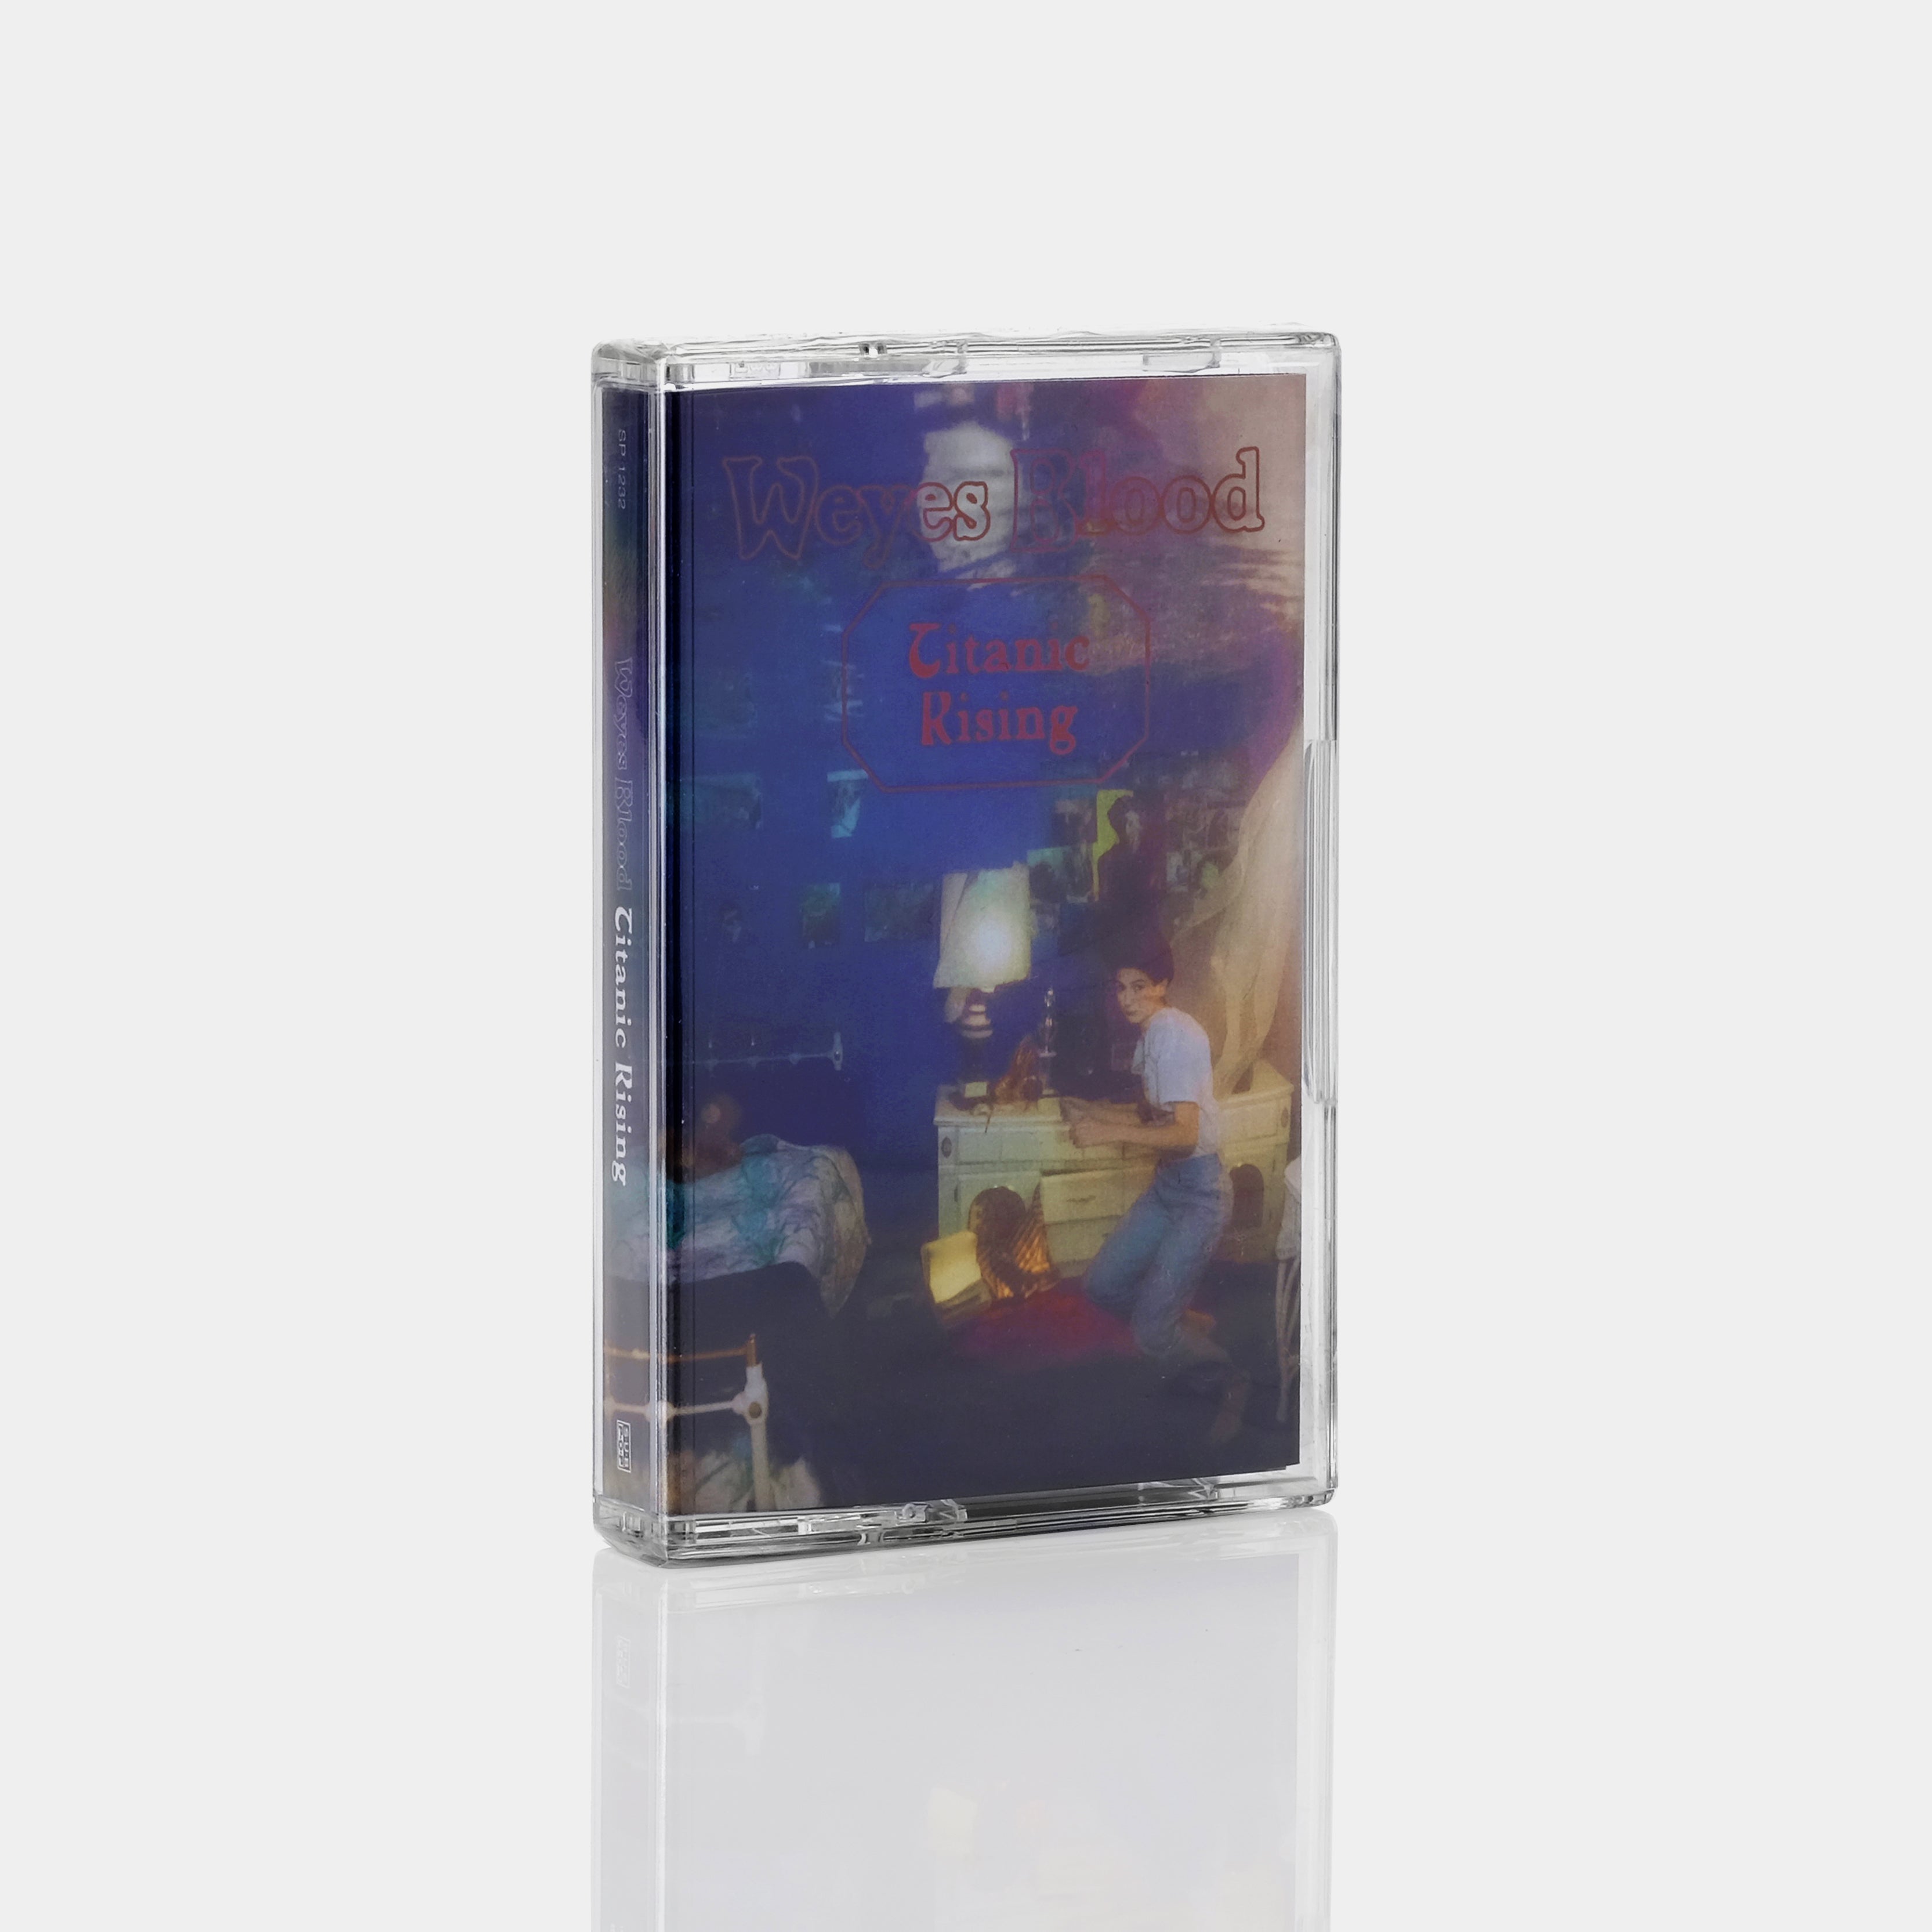 Weyes Blood - Titanic Rising Cassette Tape